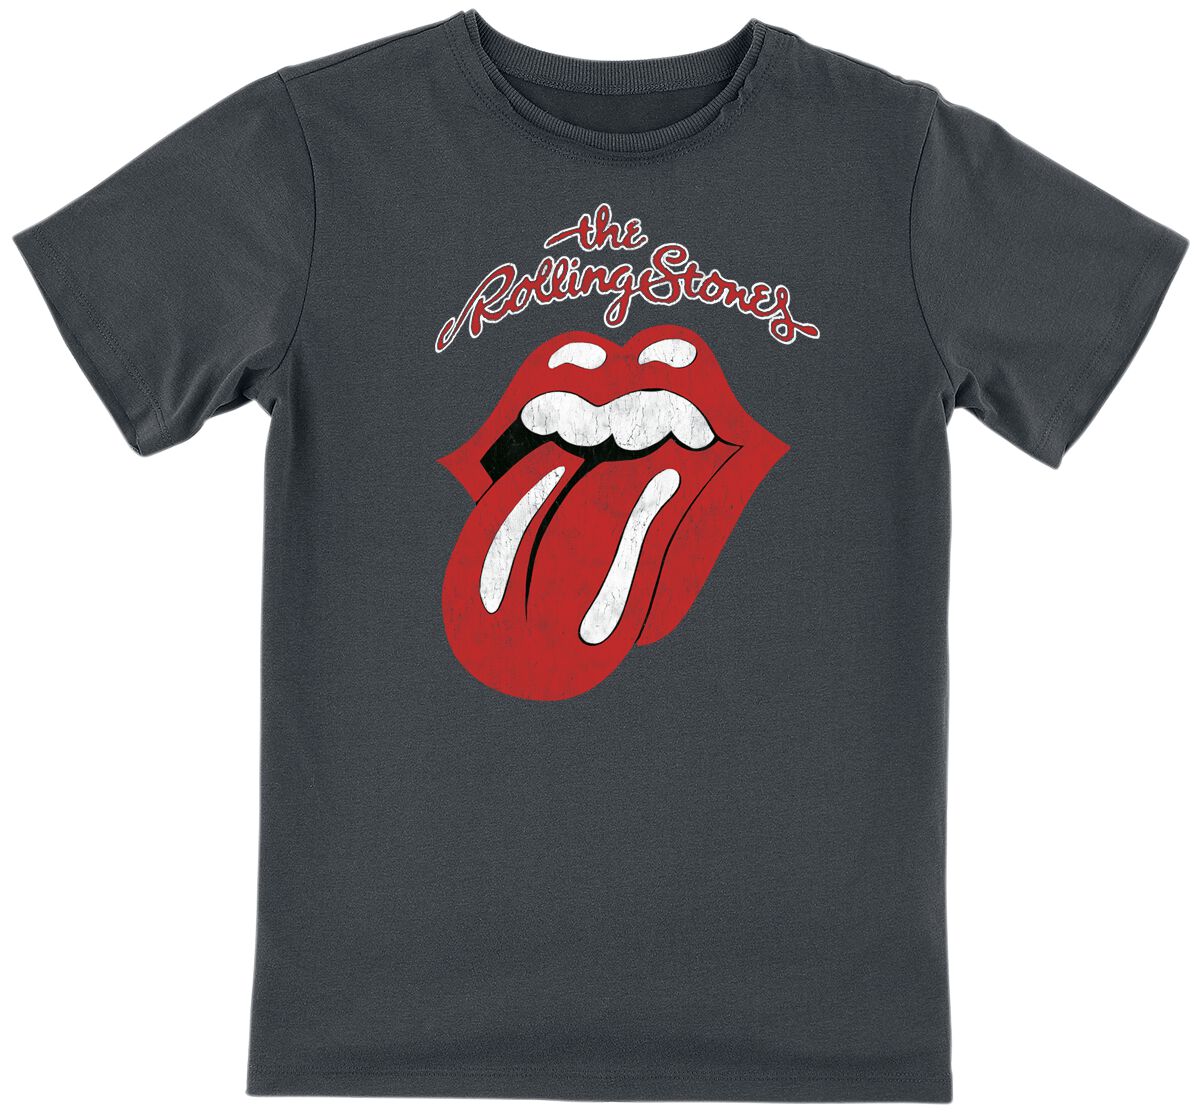 The Rolling Stones T-Shirt für Kinder - Amplified Collection - Kids - Vintage Tongue - für Mädchen & Jungen - charcoal  - Lizenziertes Merchandise!